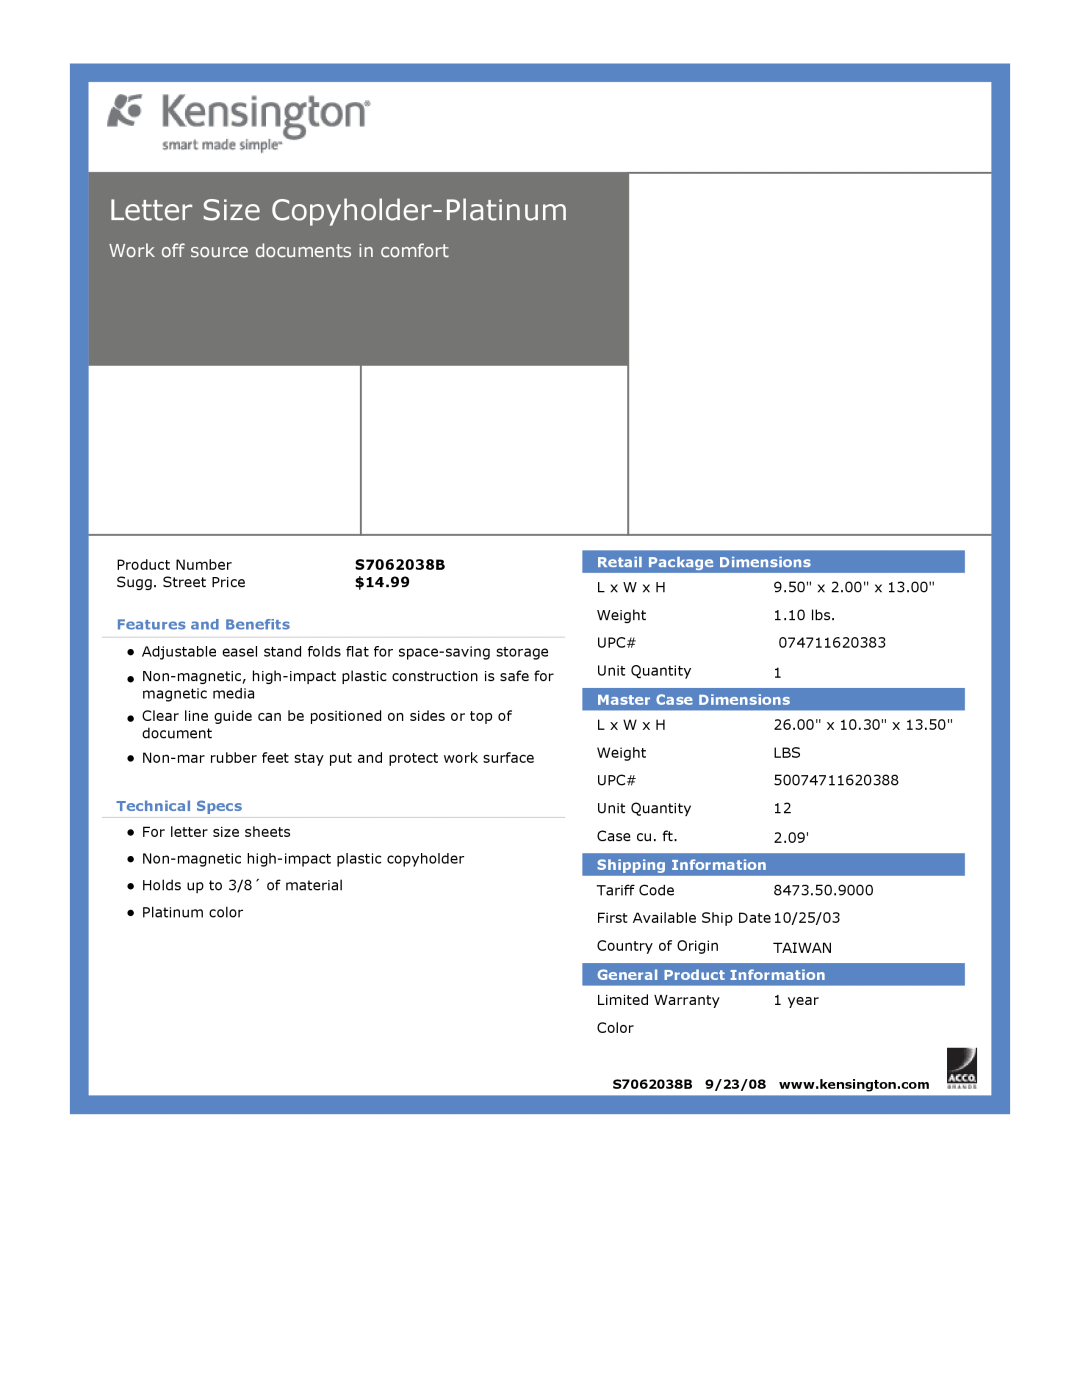 Kensington S7062038B dimensions Letter Size Copyholder-Platinum, Work off source documents in comfort, $14.99 